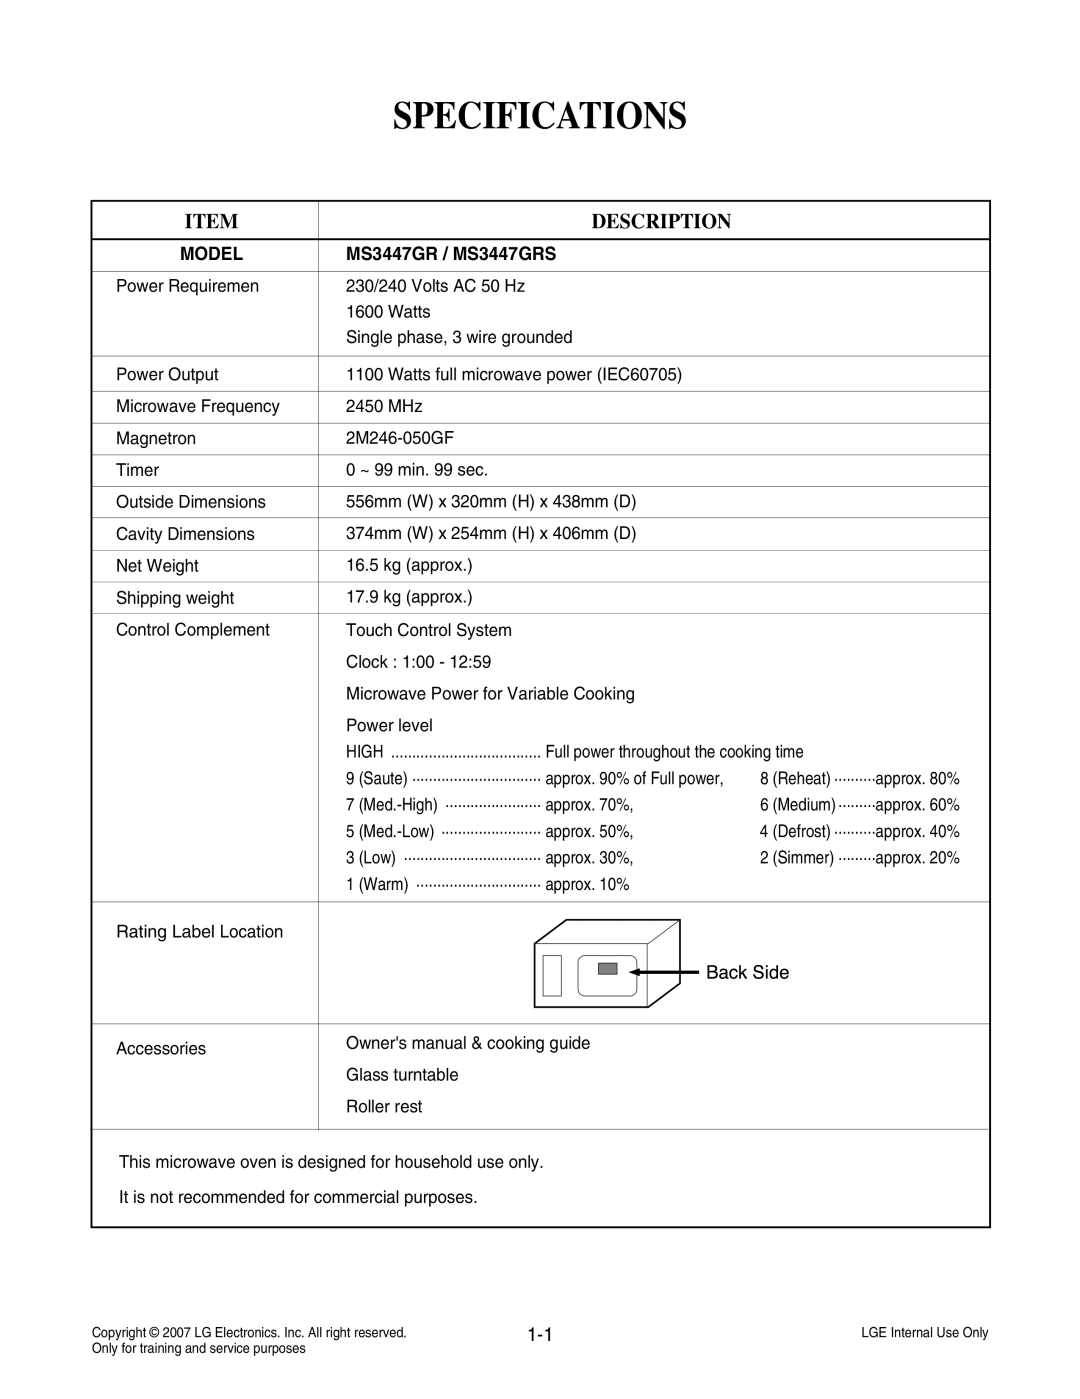 LG Electronics service manual Specifications, Description, Model, MS3447GR / MS3447GRS 